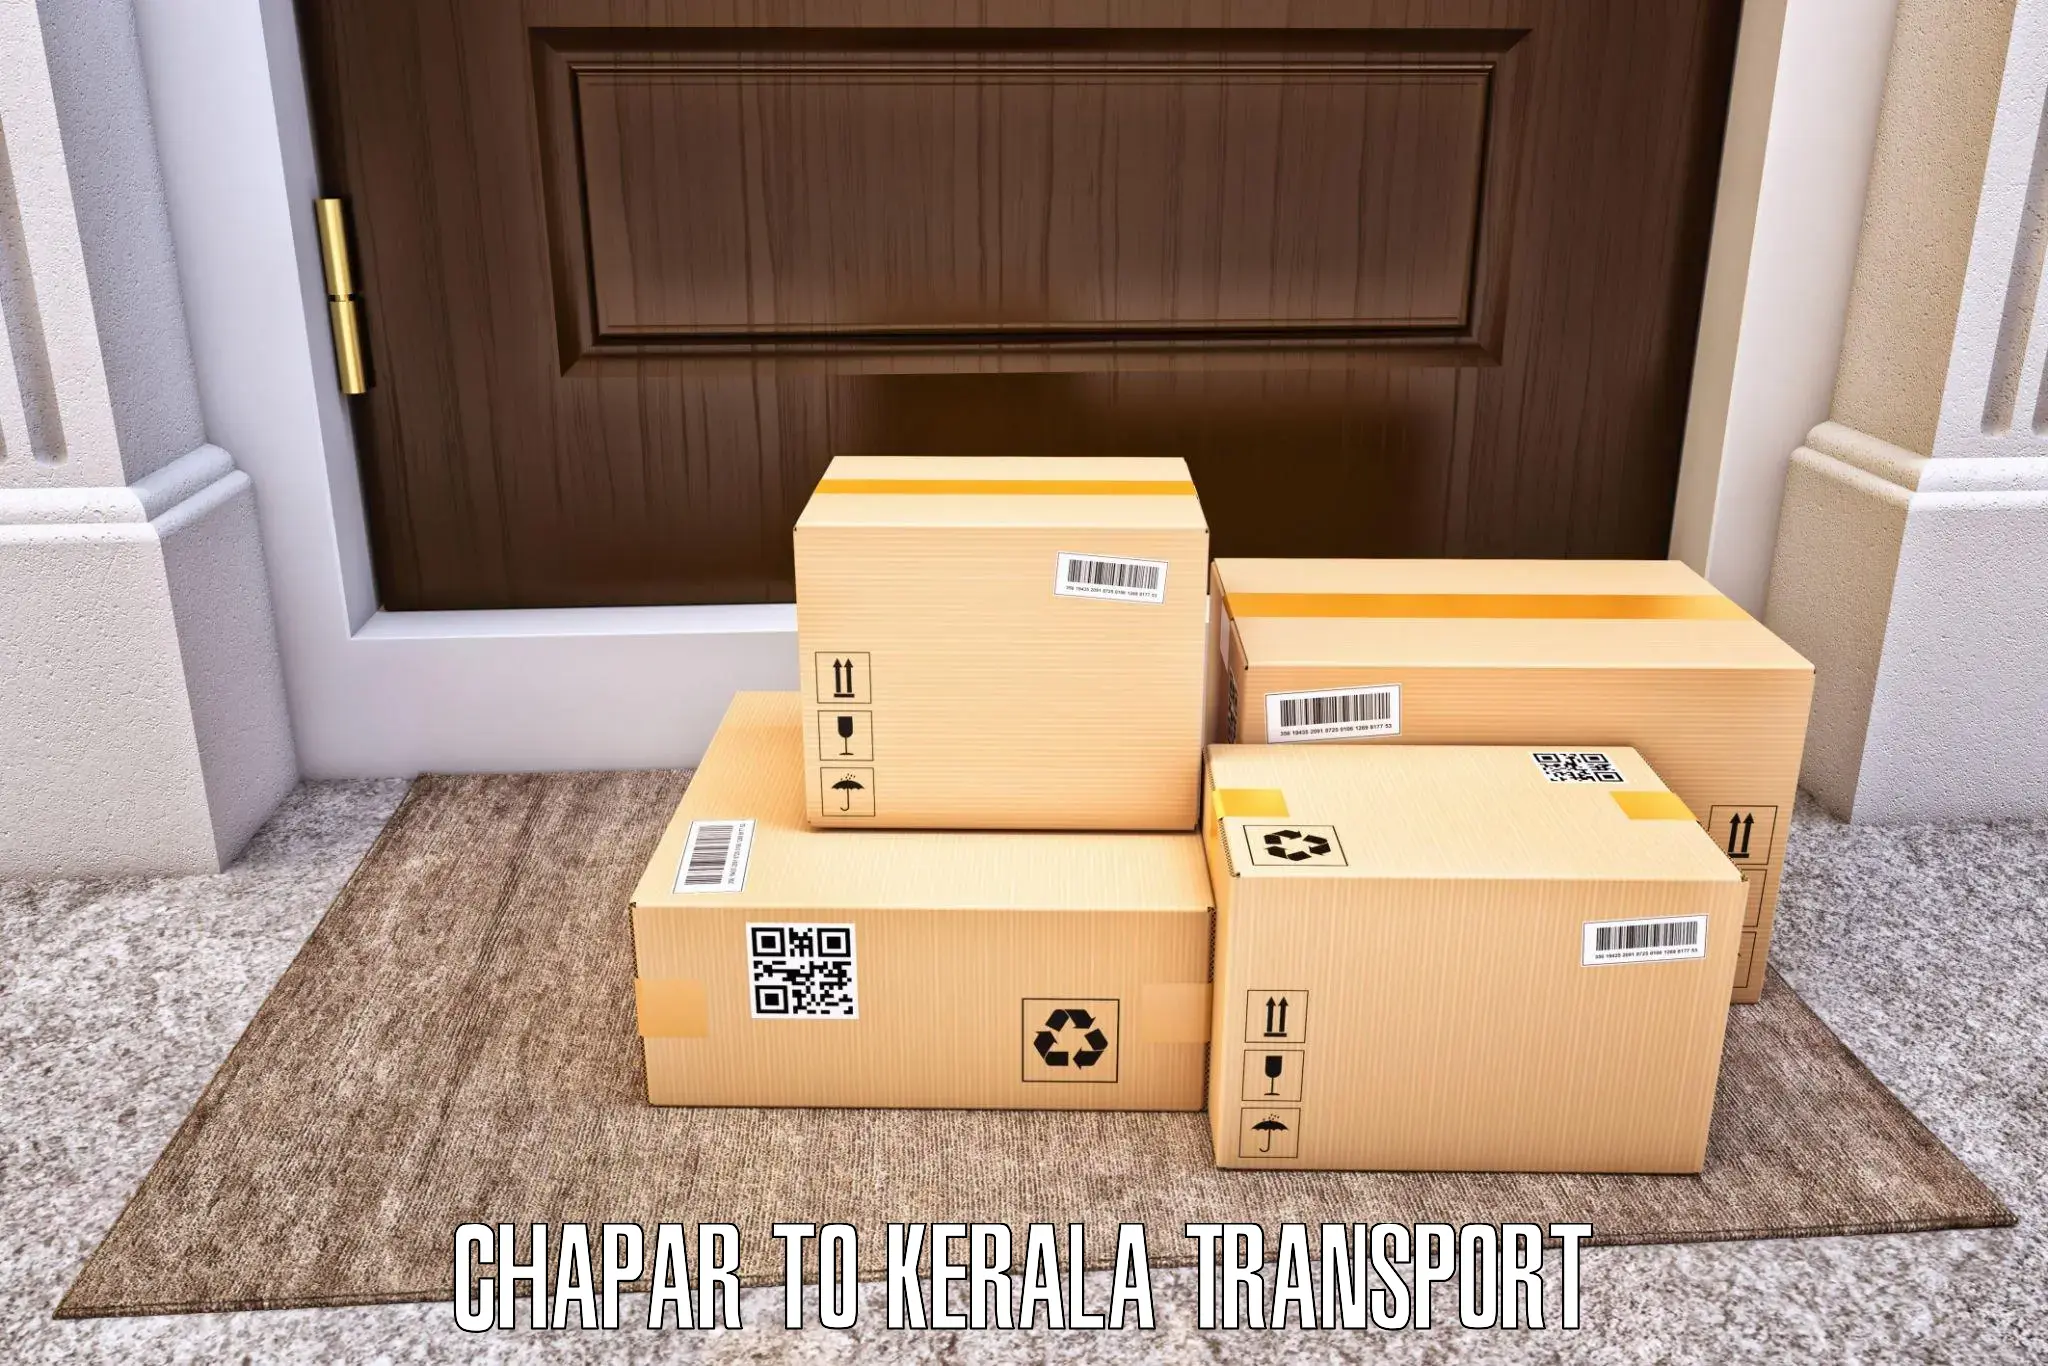 Transport in sharing in Chapar to Kochi